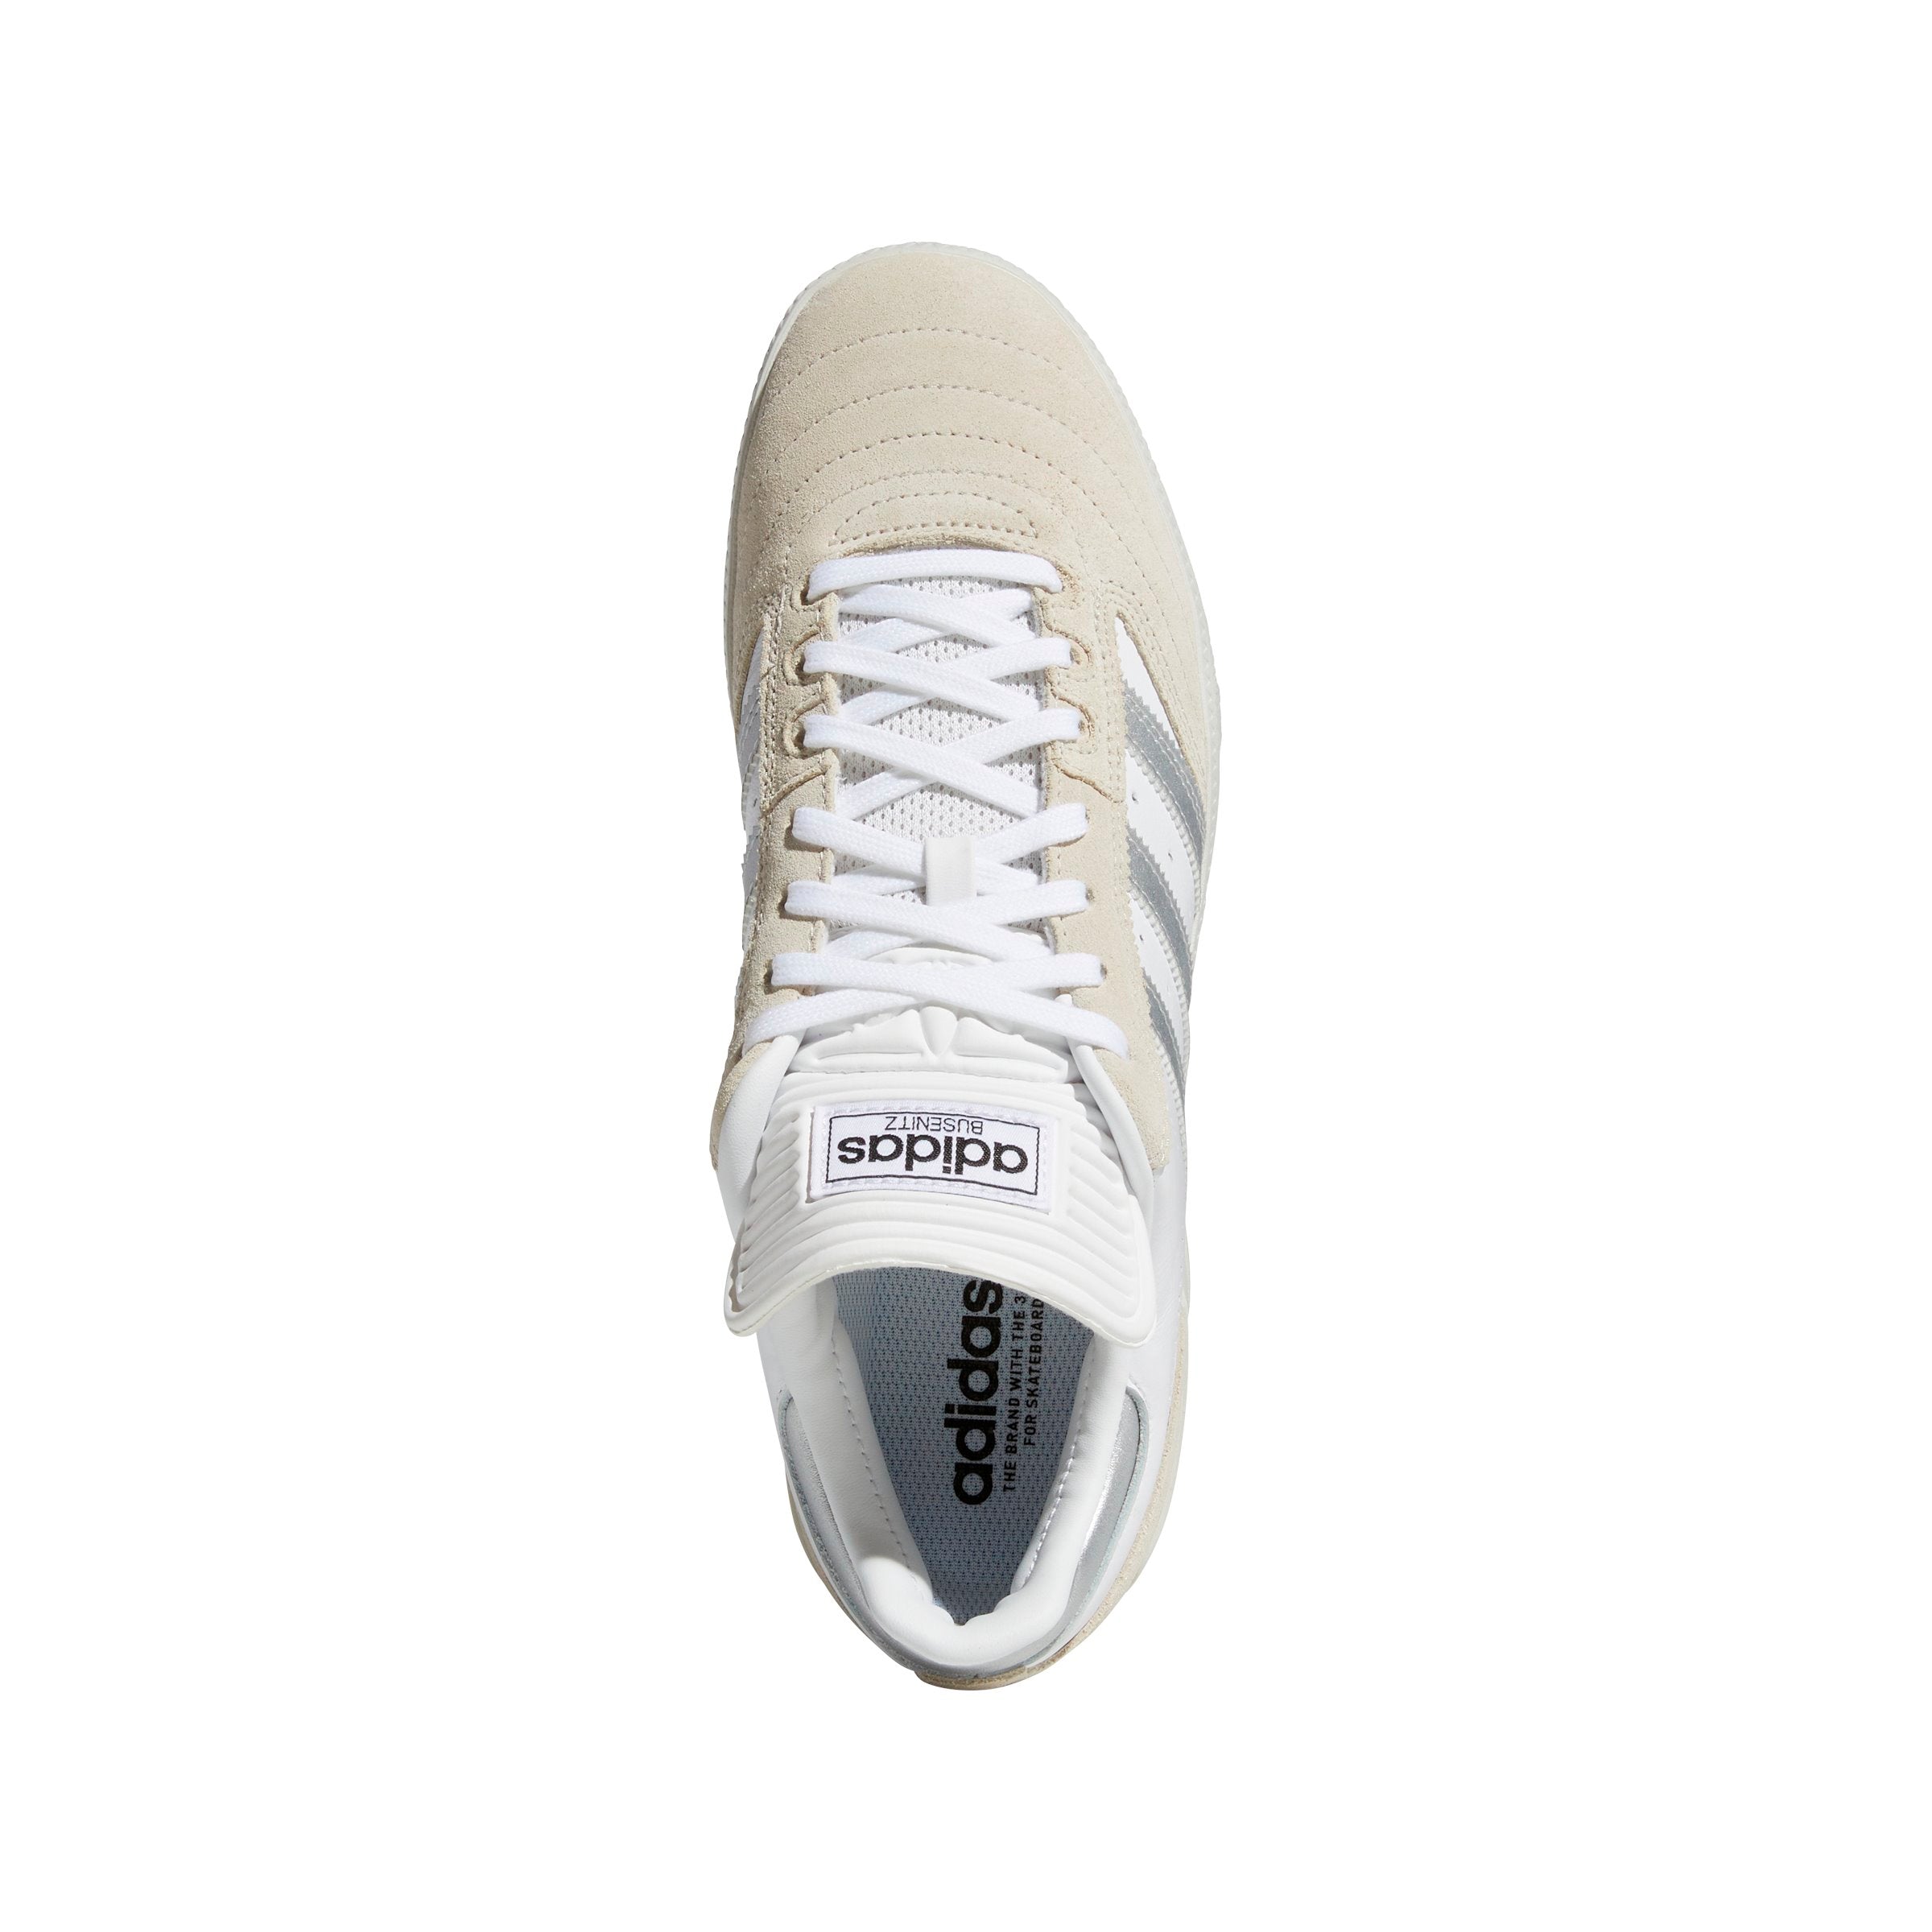 Adidas Busenitz Crystal White - Silver Metallic - Cloud White Sneaker adidas Skateboarding 